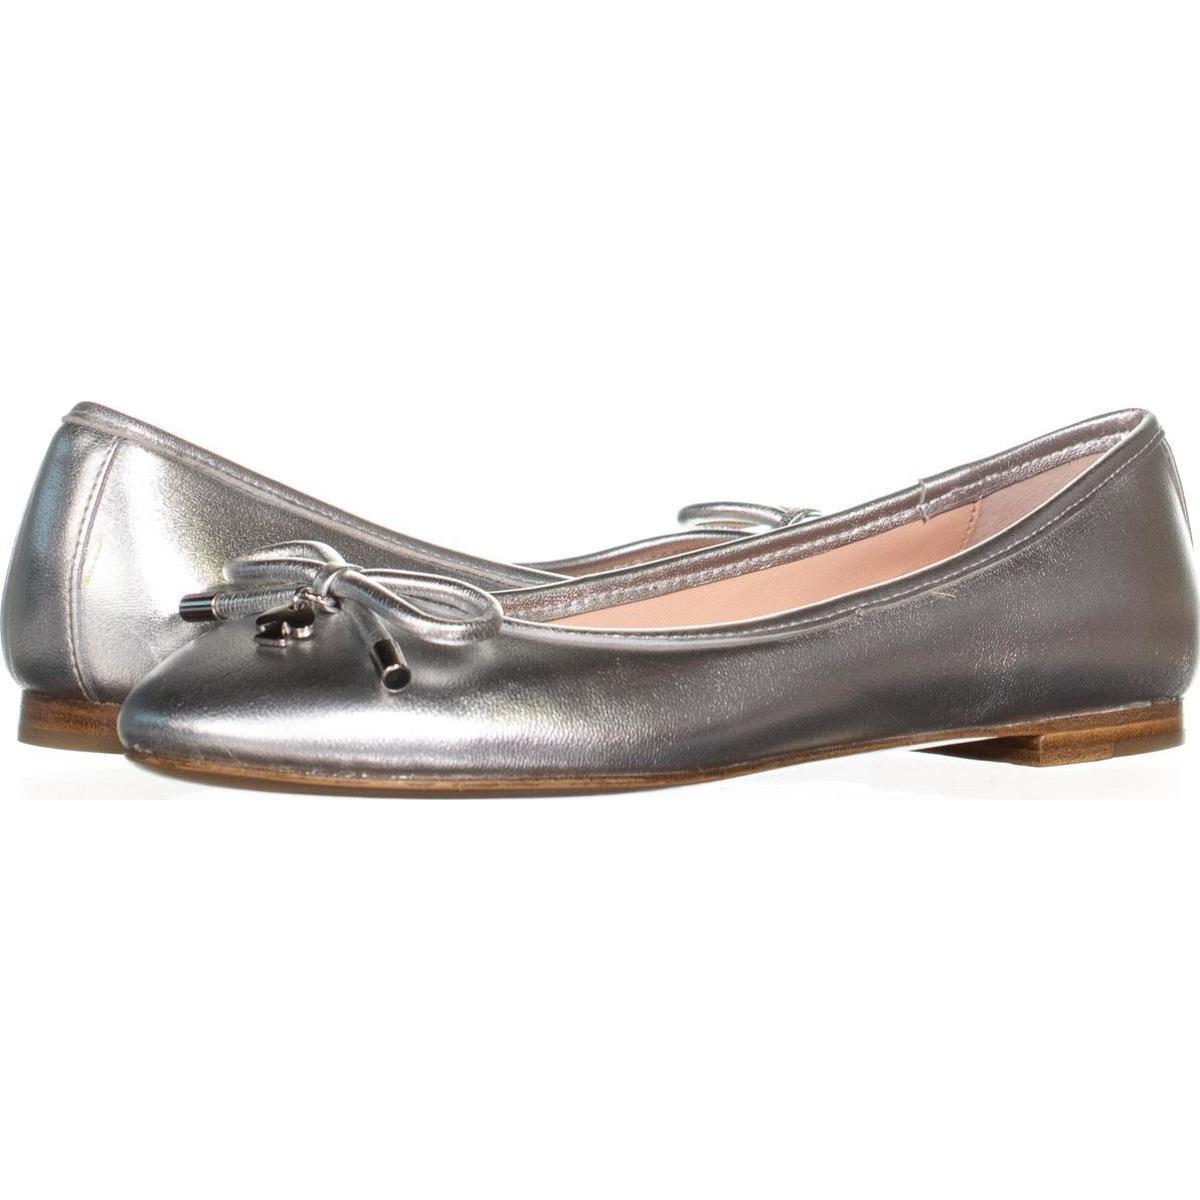 Kate Spade Willa Ballet Flats 502, Silver, 5 US - Flats & Oxfords